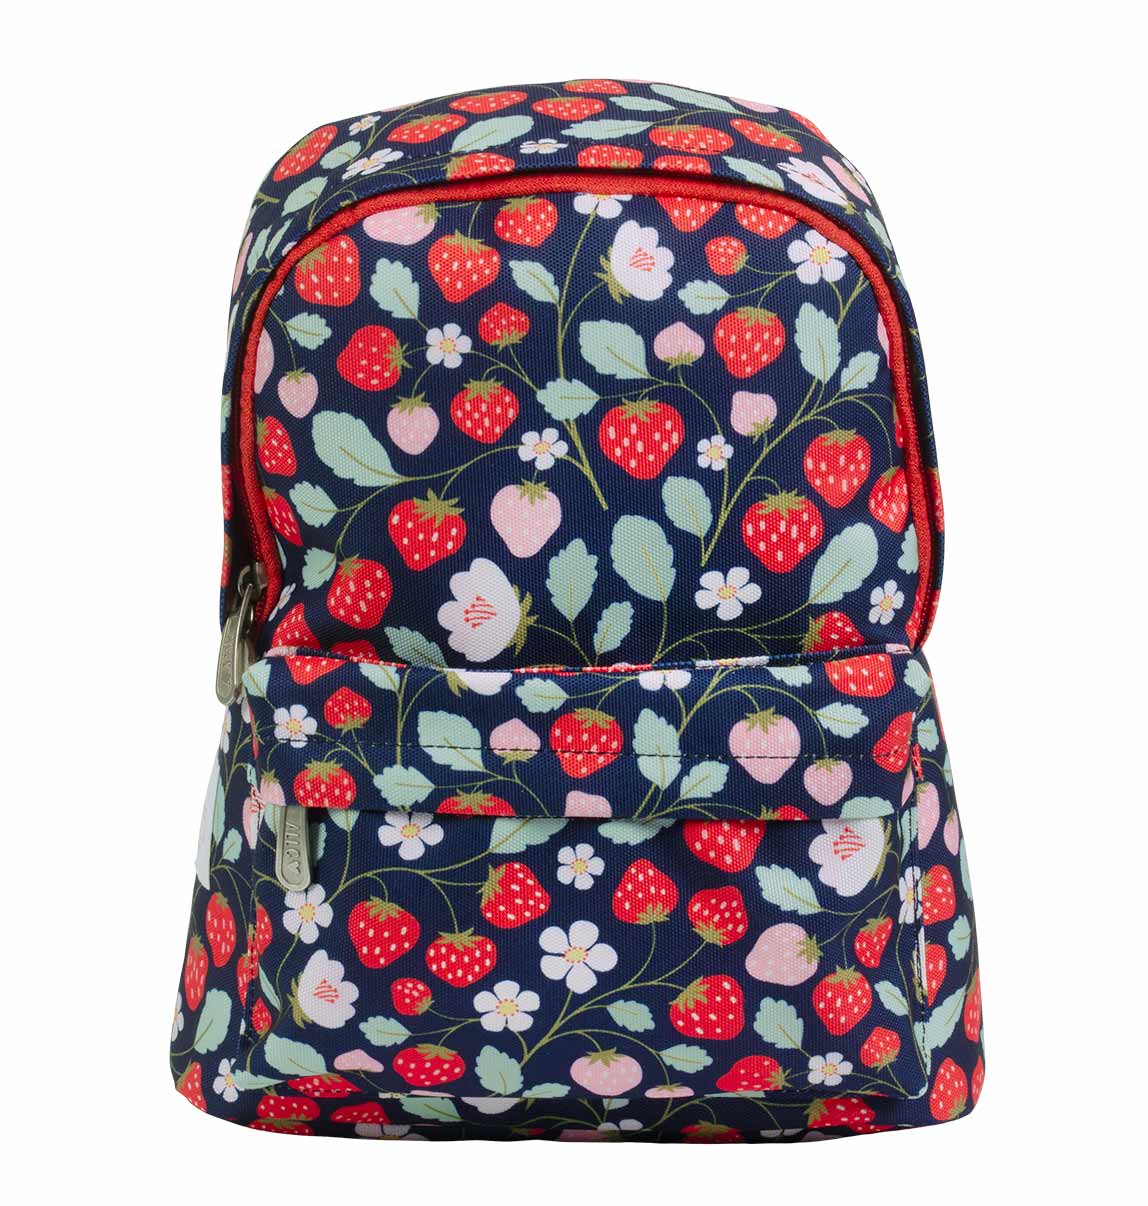 Little Kids Backpack - Strawberries